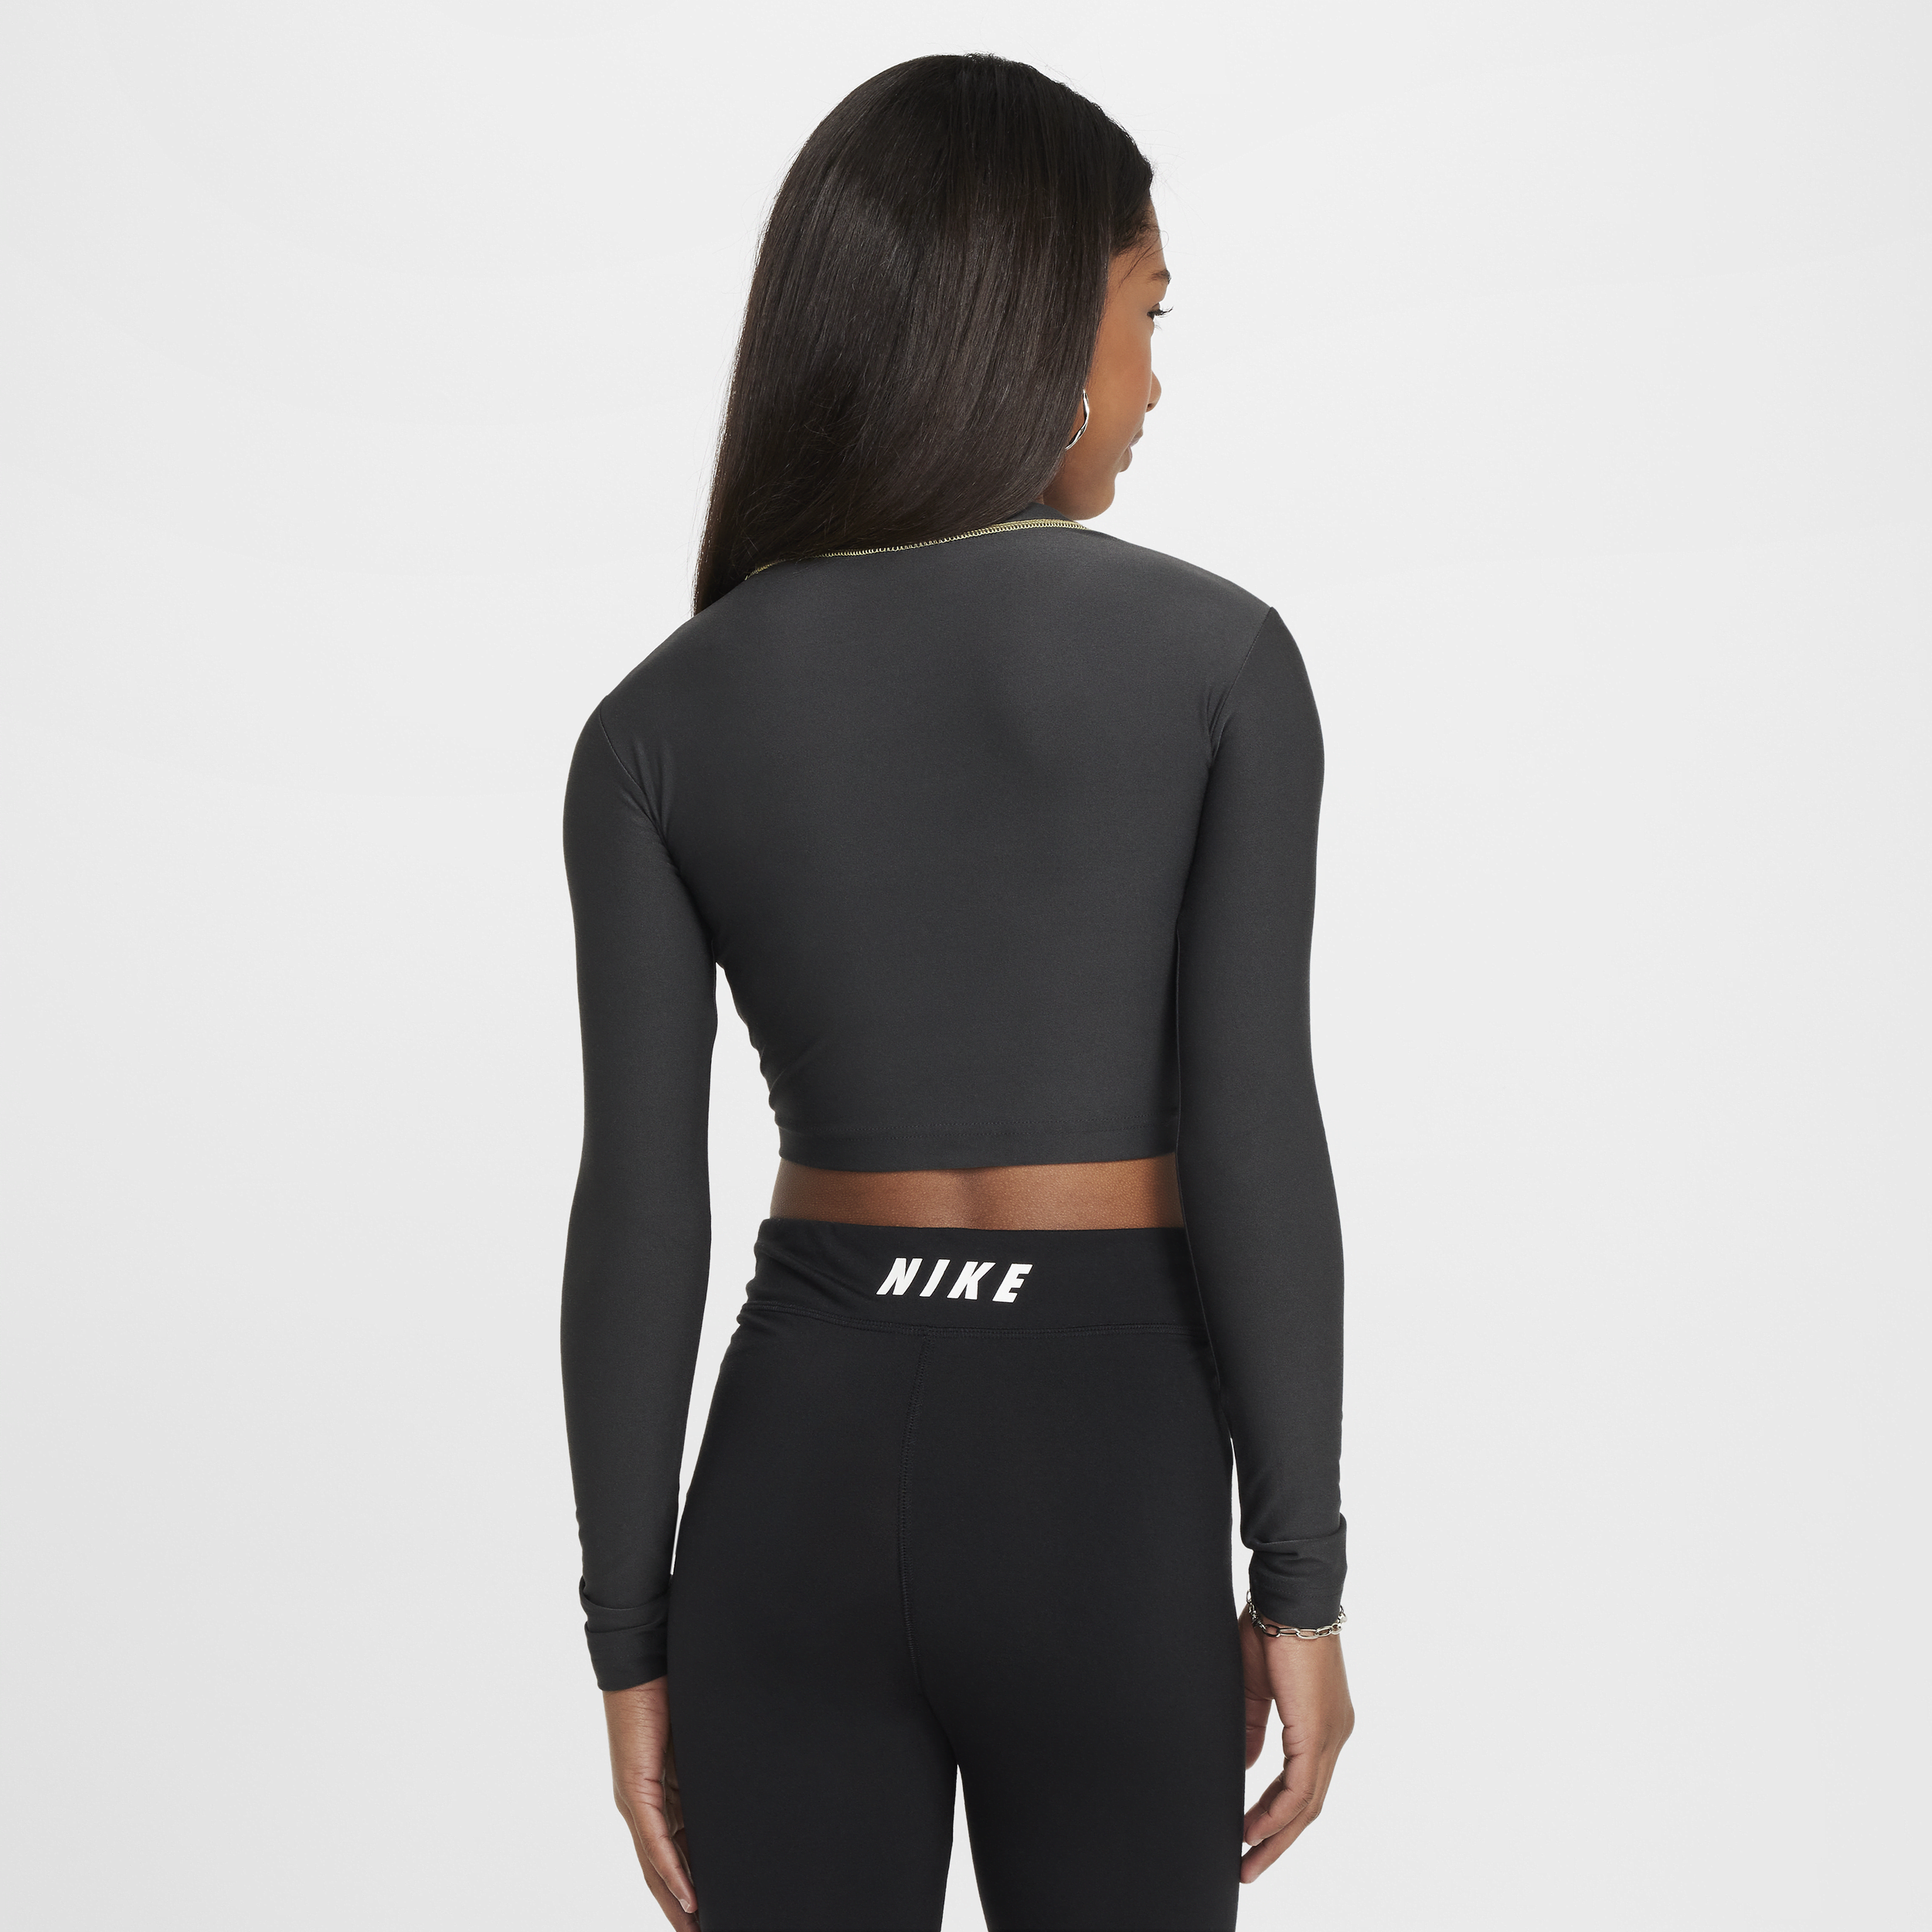 Nike Sportswear croptop met lange mouwen voor meisjes Grijs